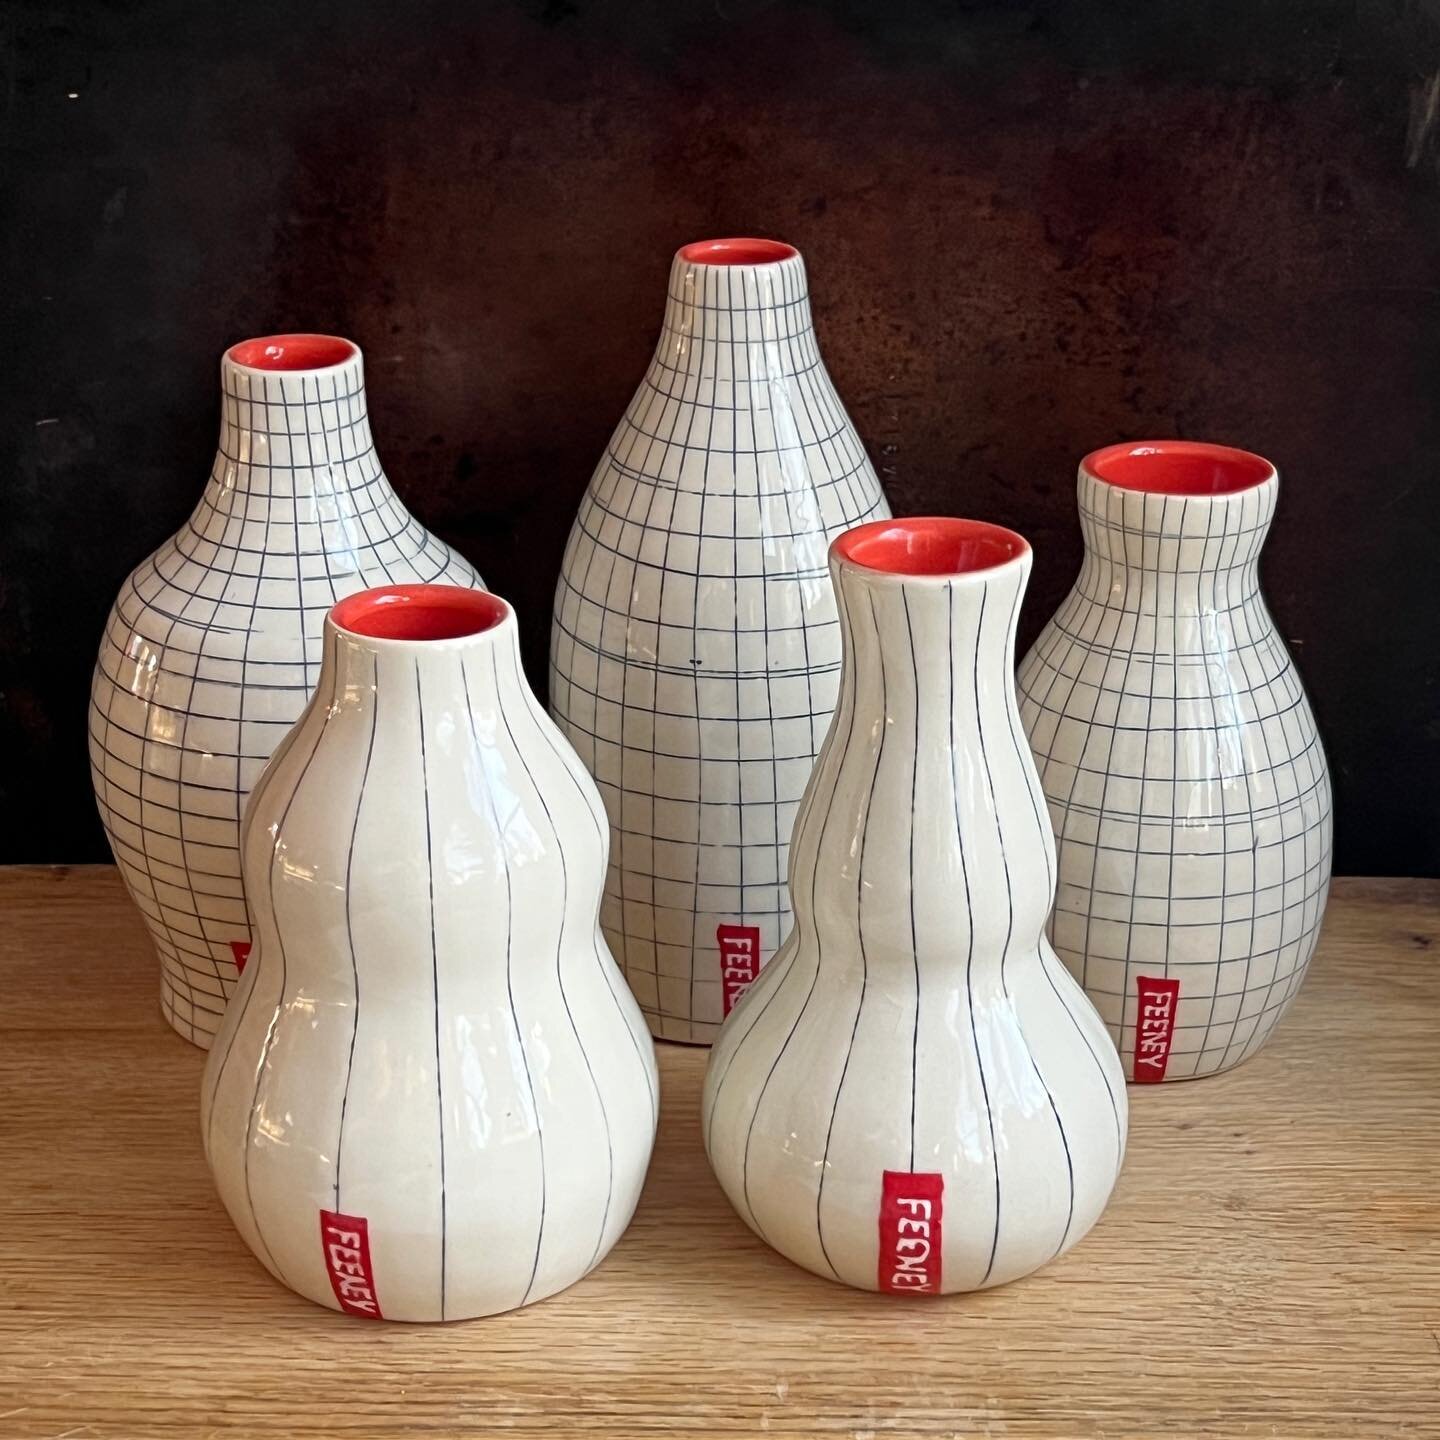 The big guys. 
.
.
#vase #graphicclay #ceramics #red